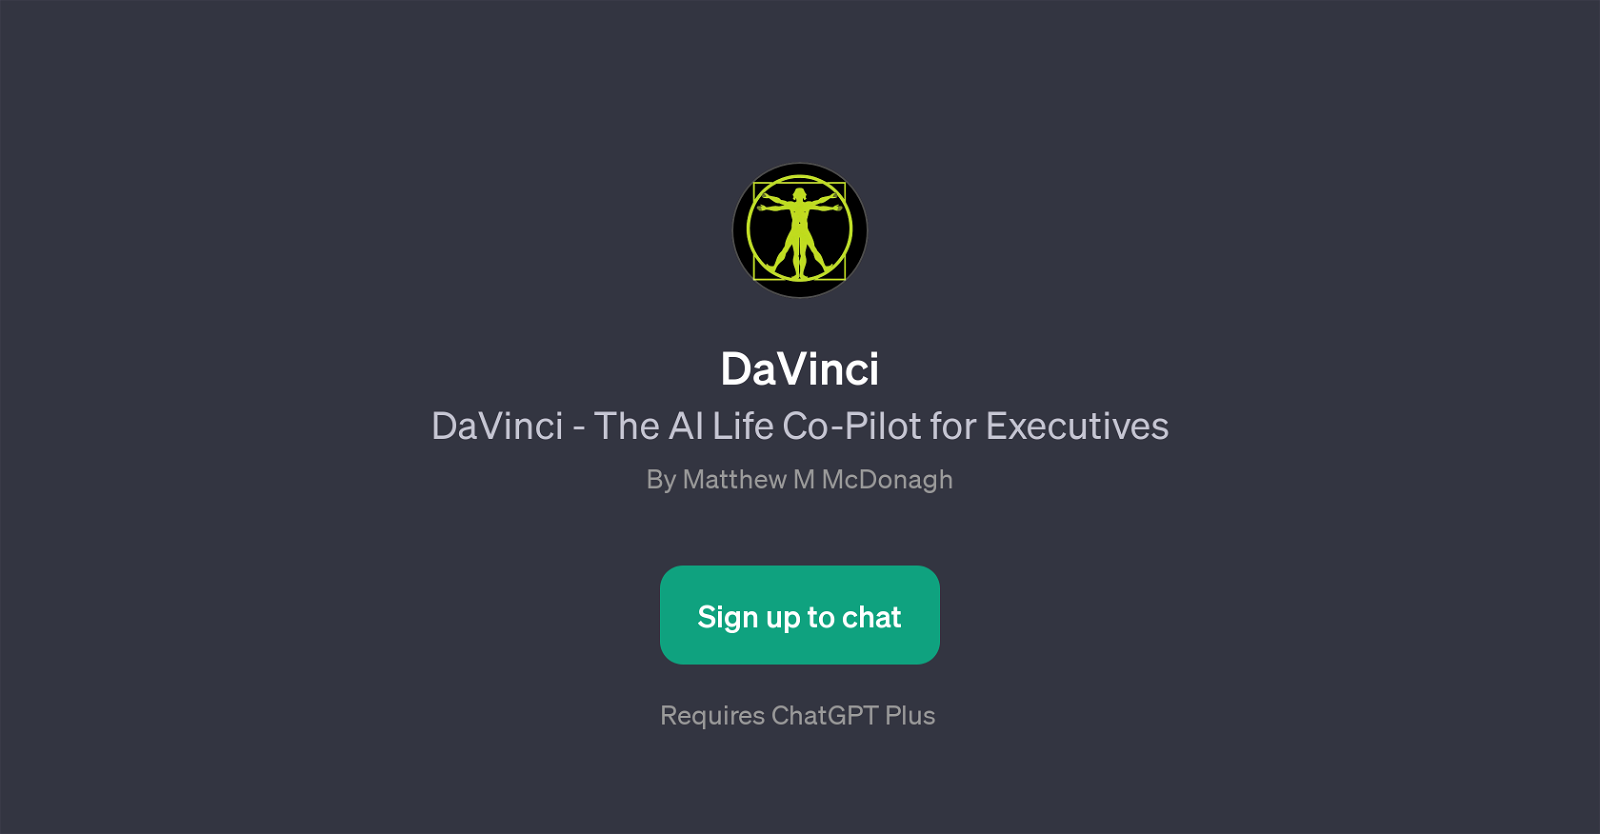 DaVinci website